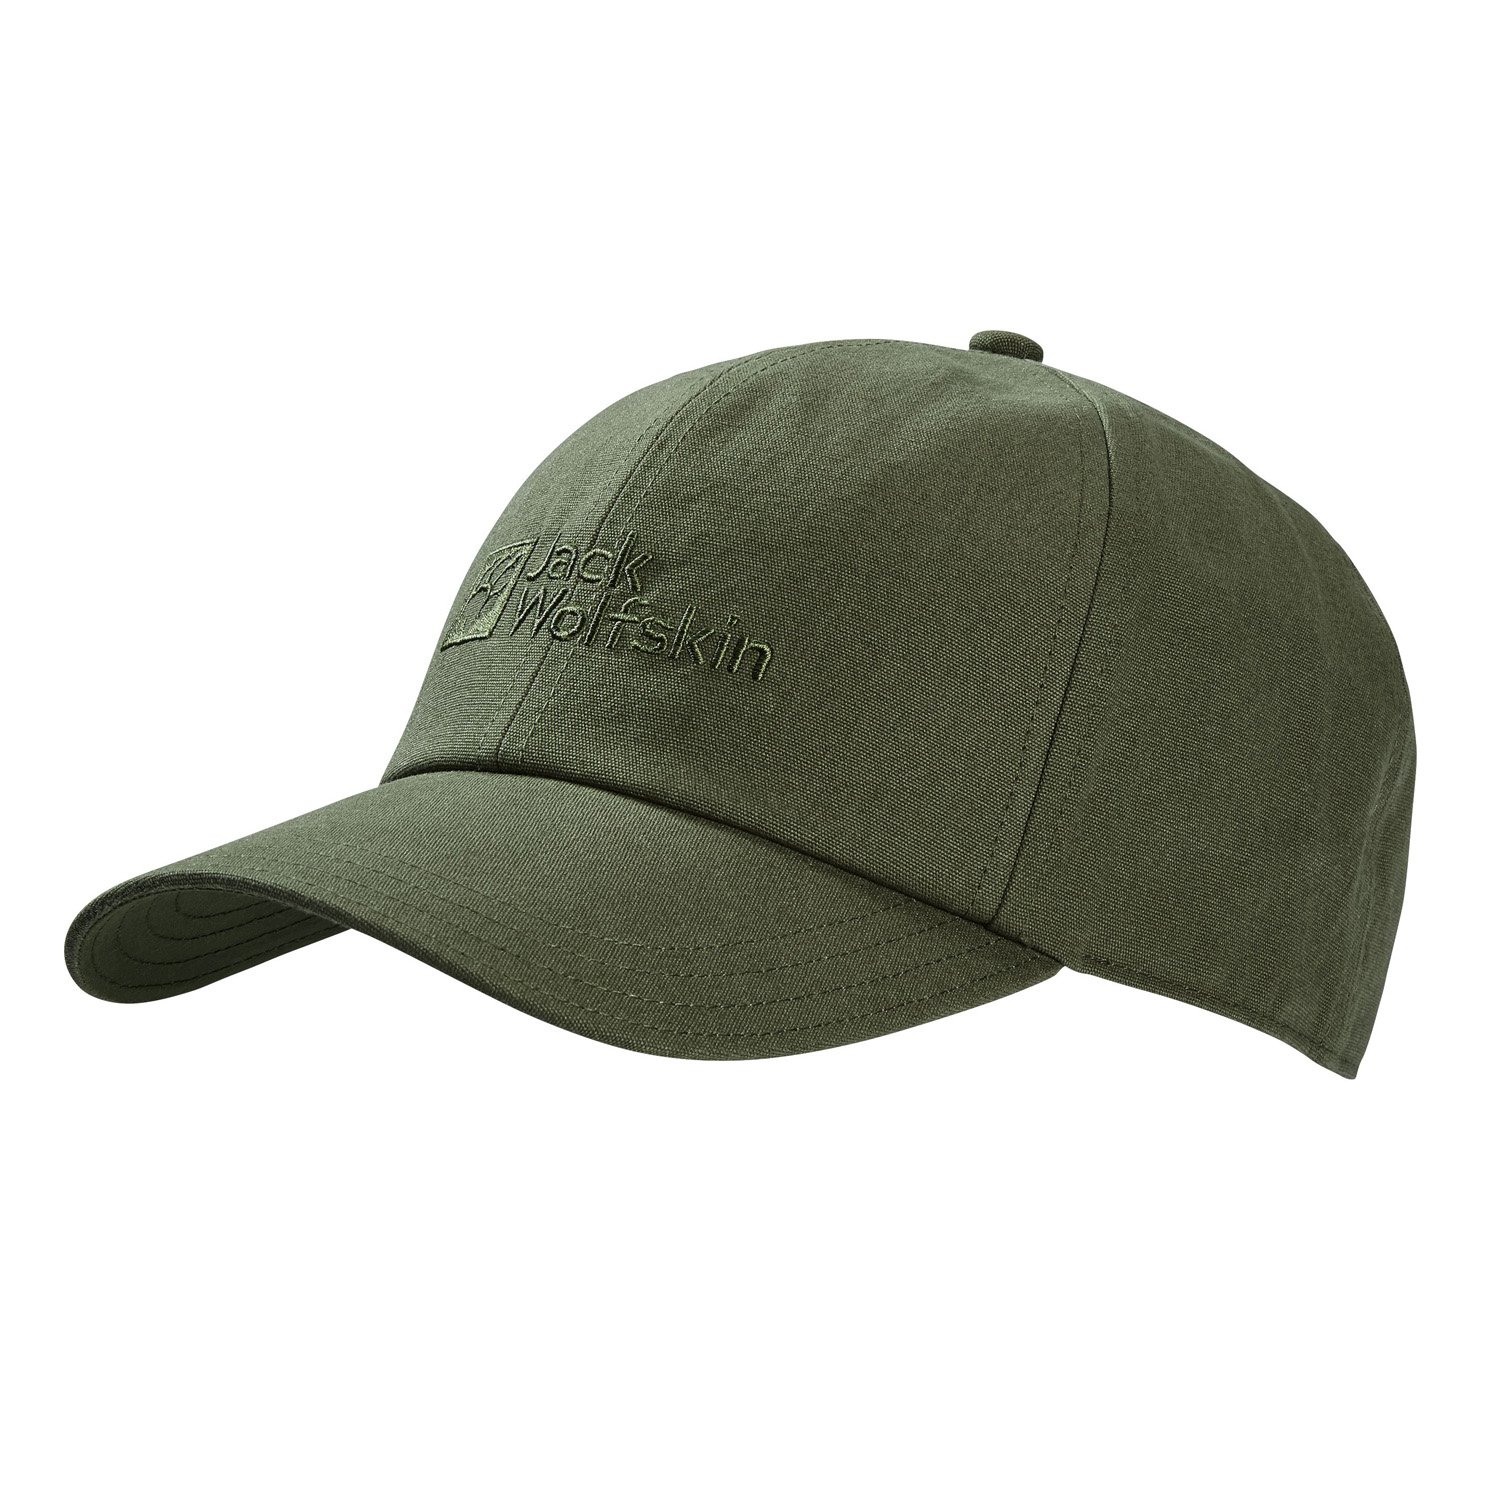 Jack Wolfskin Baseball Şapka - Yeşil - 1